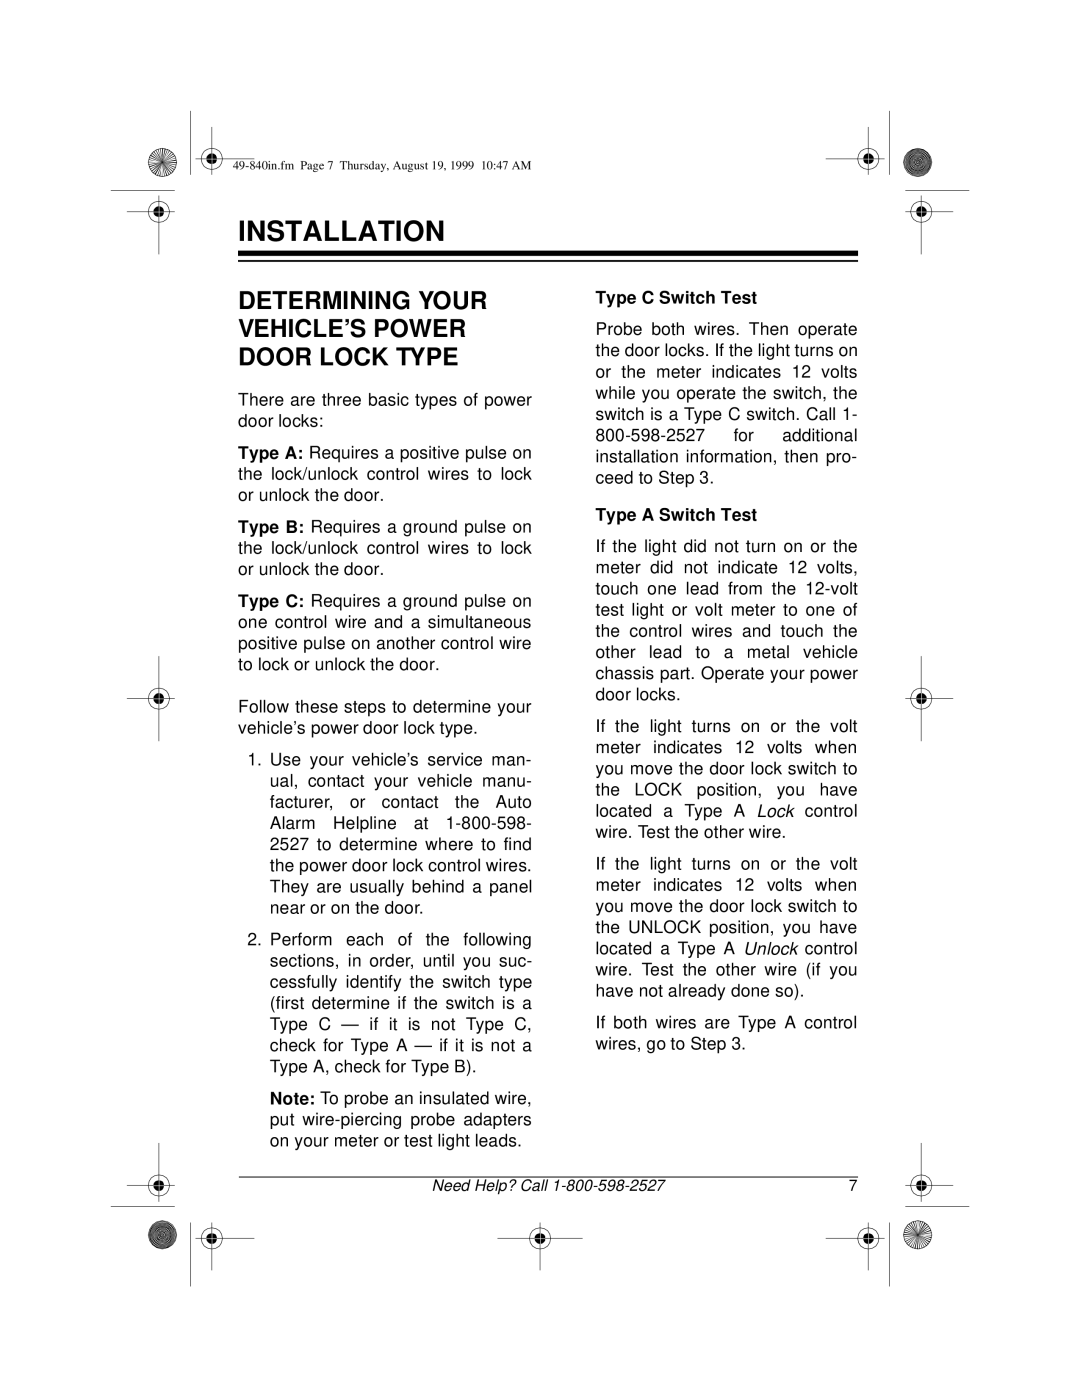 Radio Shack RS-4000 installation manual Installation, Determining Your Vehicle’S Power Door Lock Type 